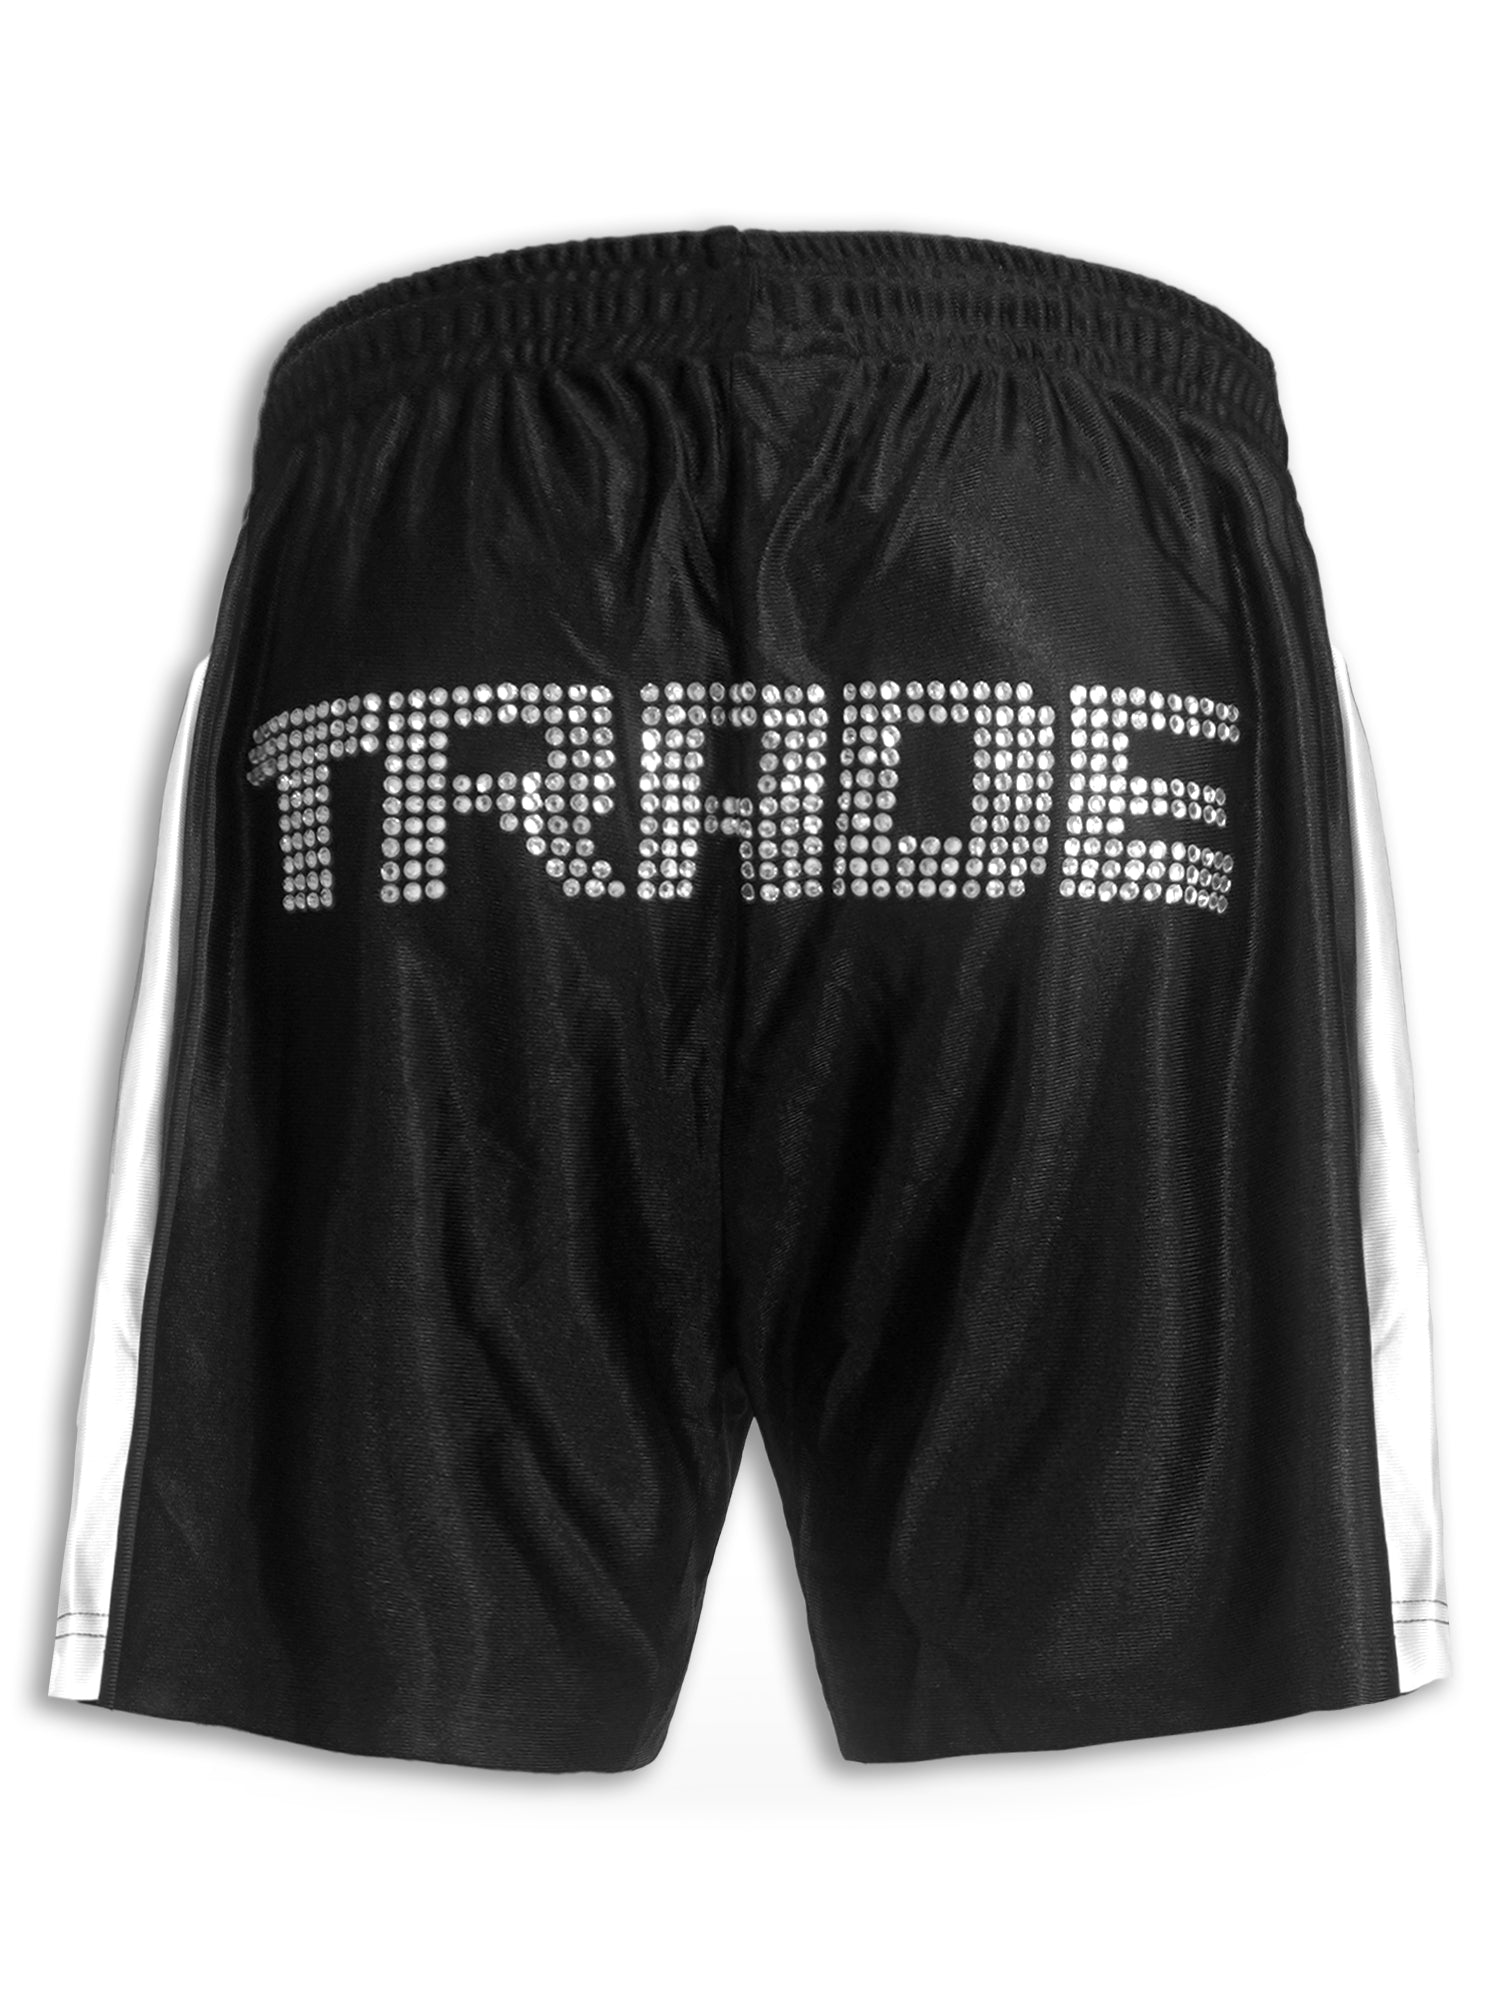 'Trade' Rhinestone Shorts - Patrick Church